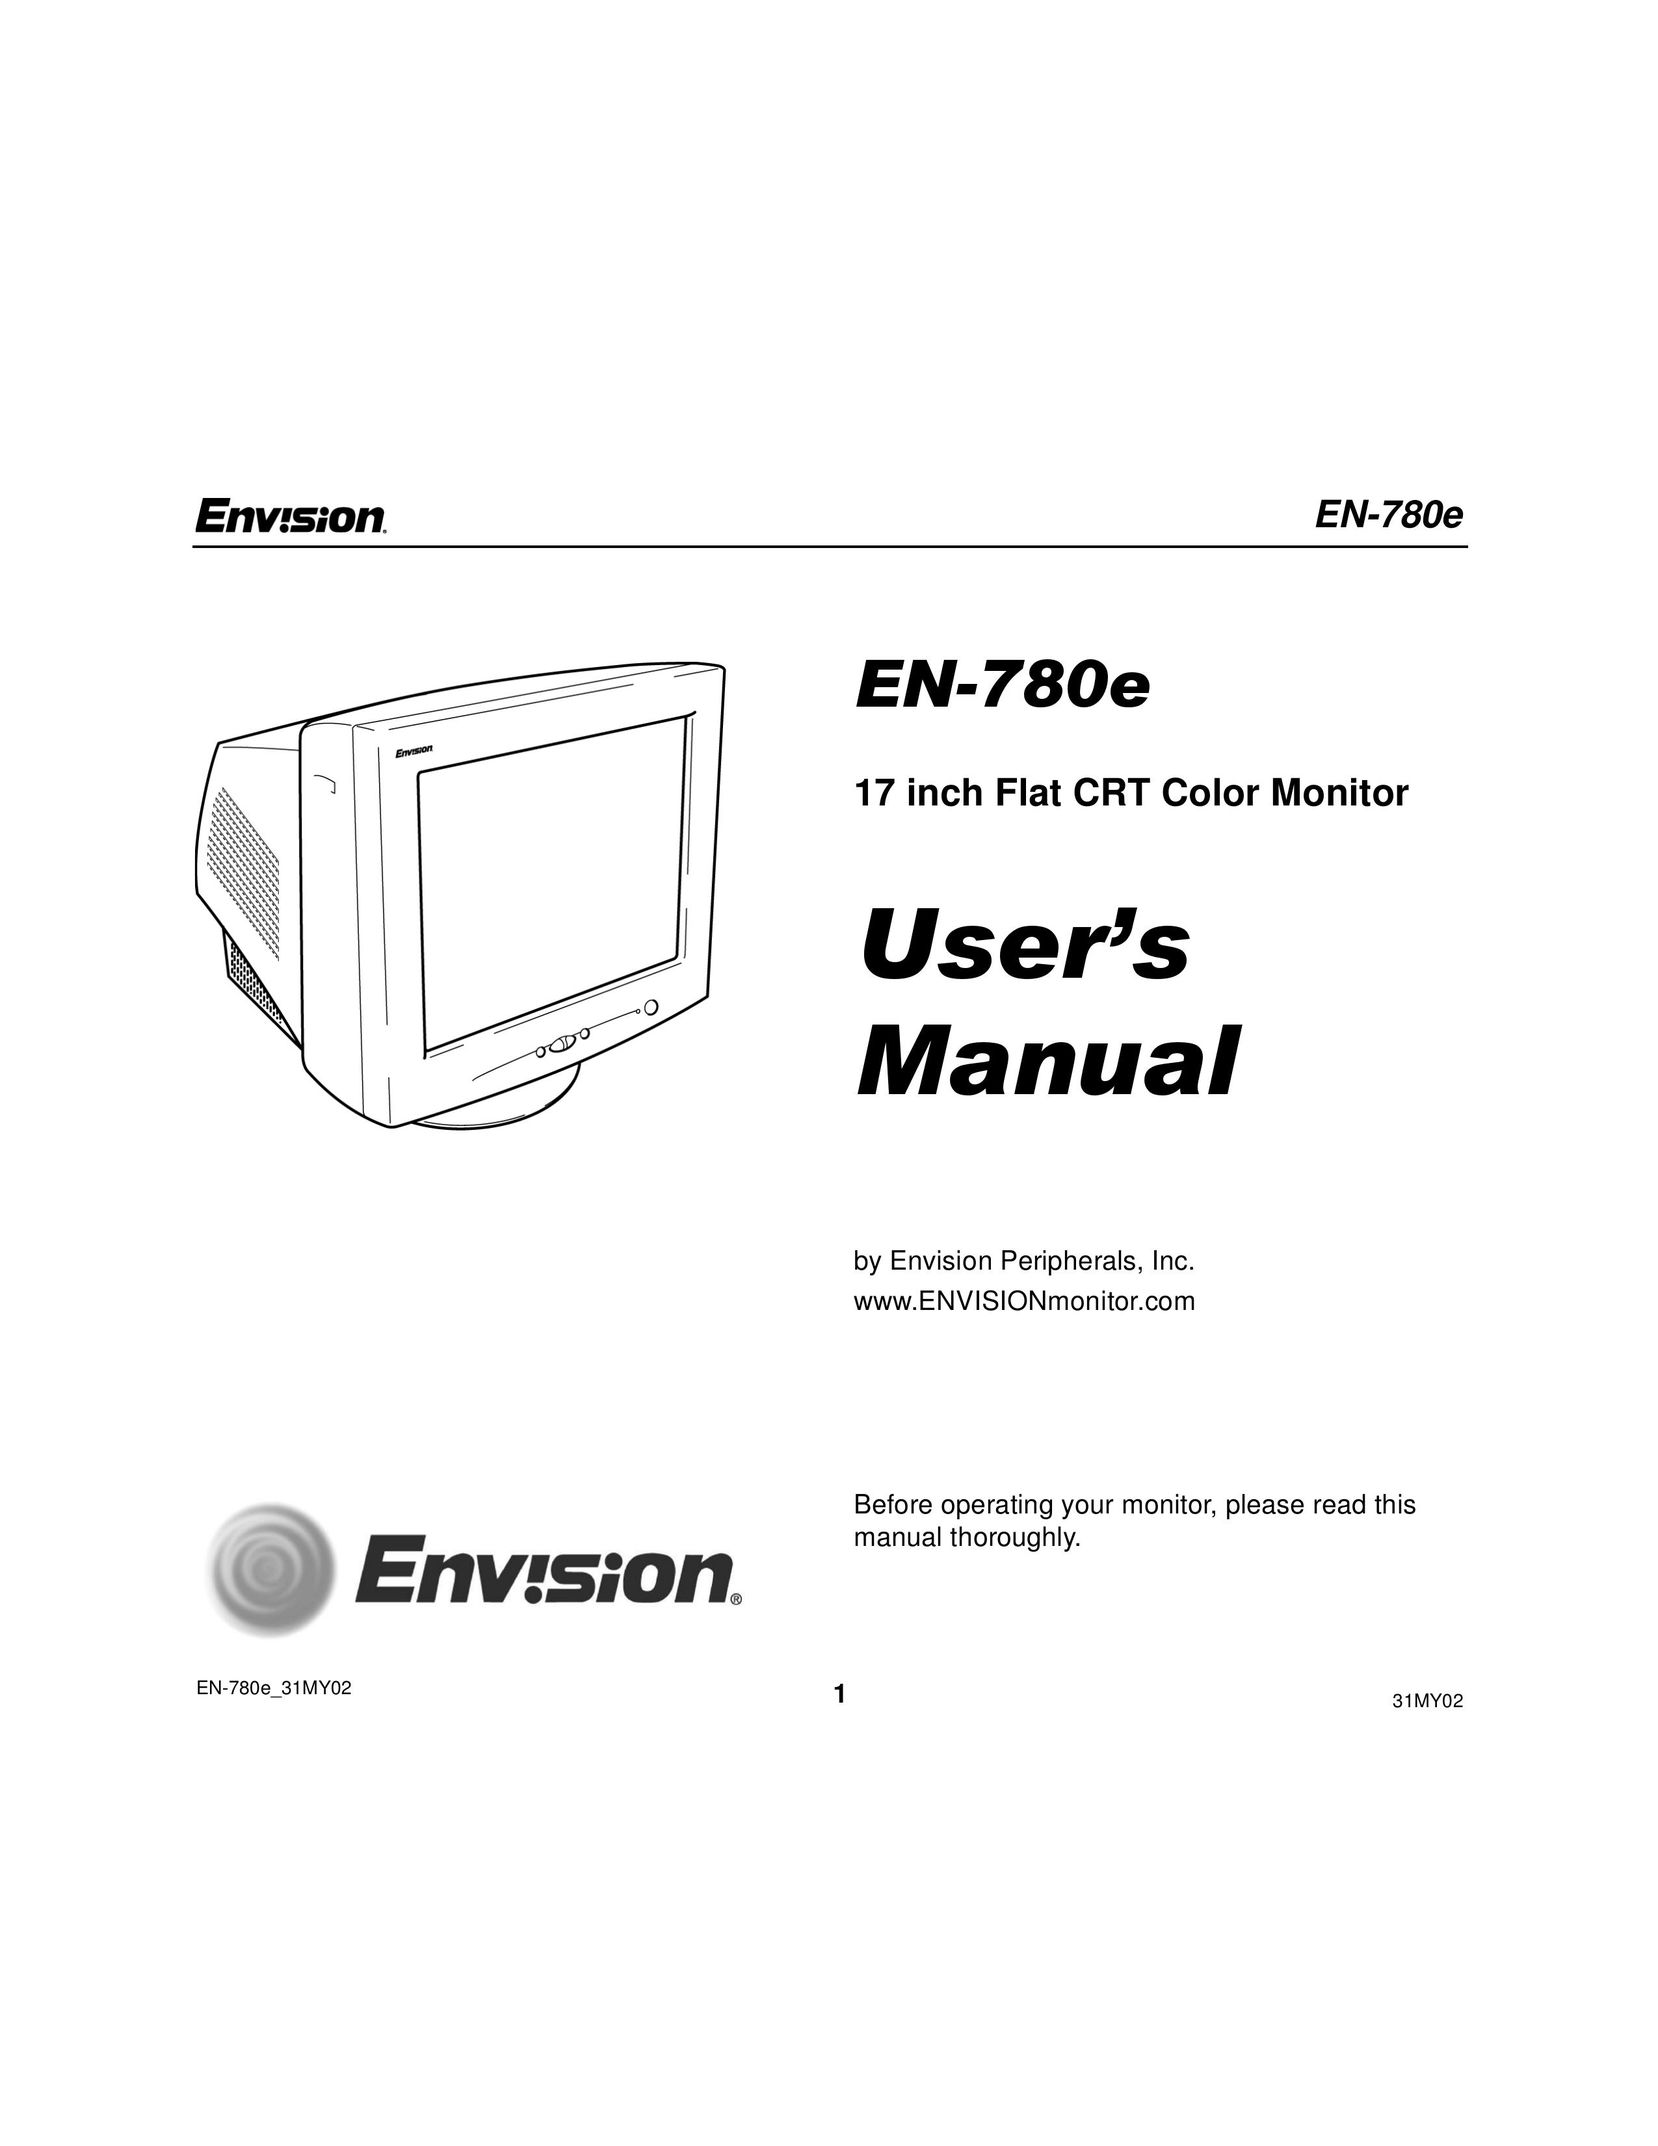 Envision Peripherals EN-780e 1 Computer Monitor User Manual